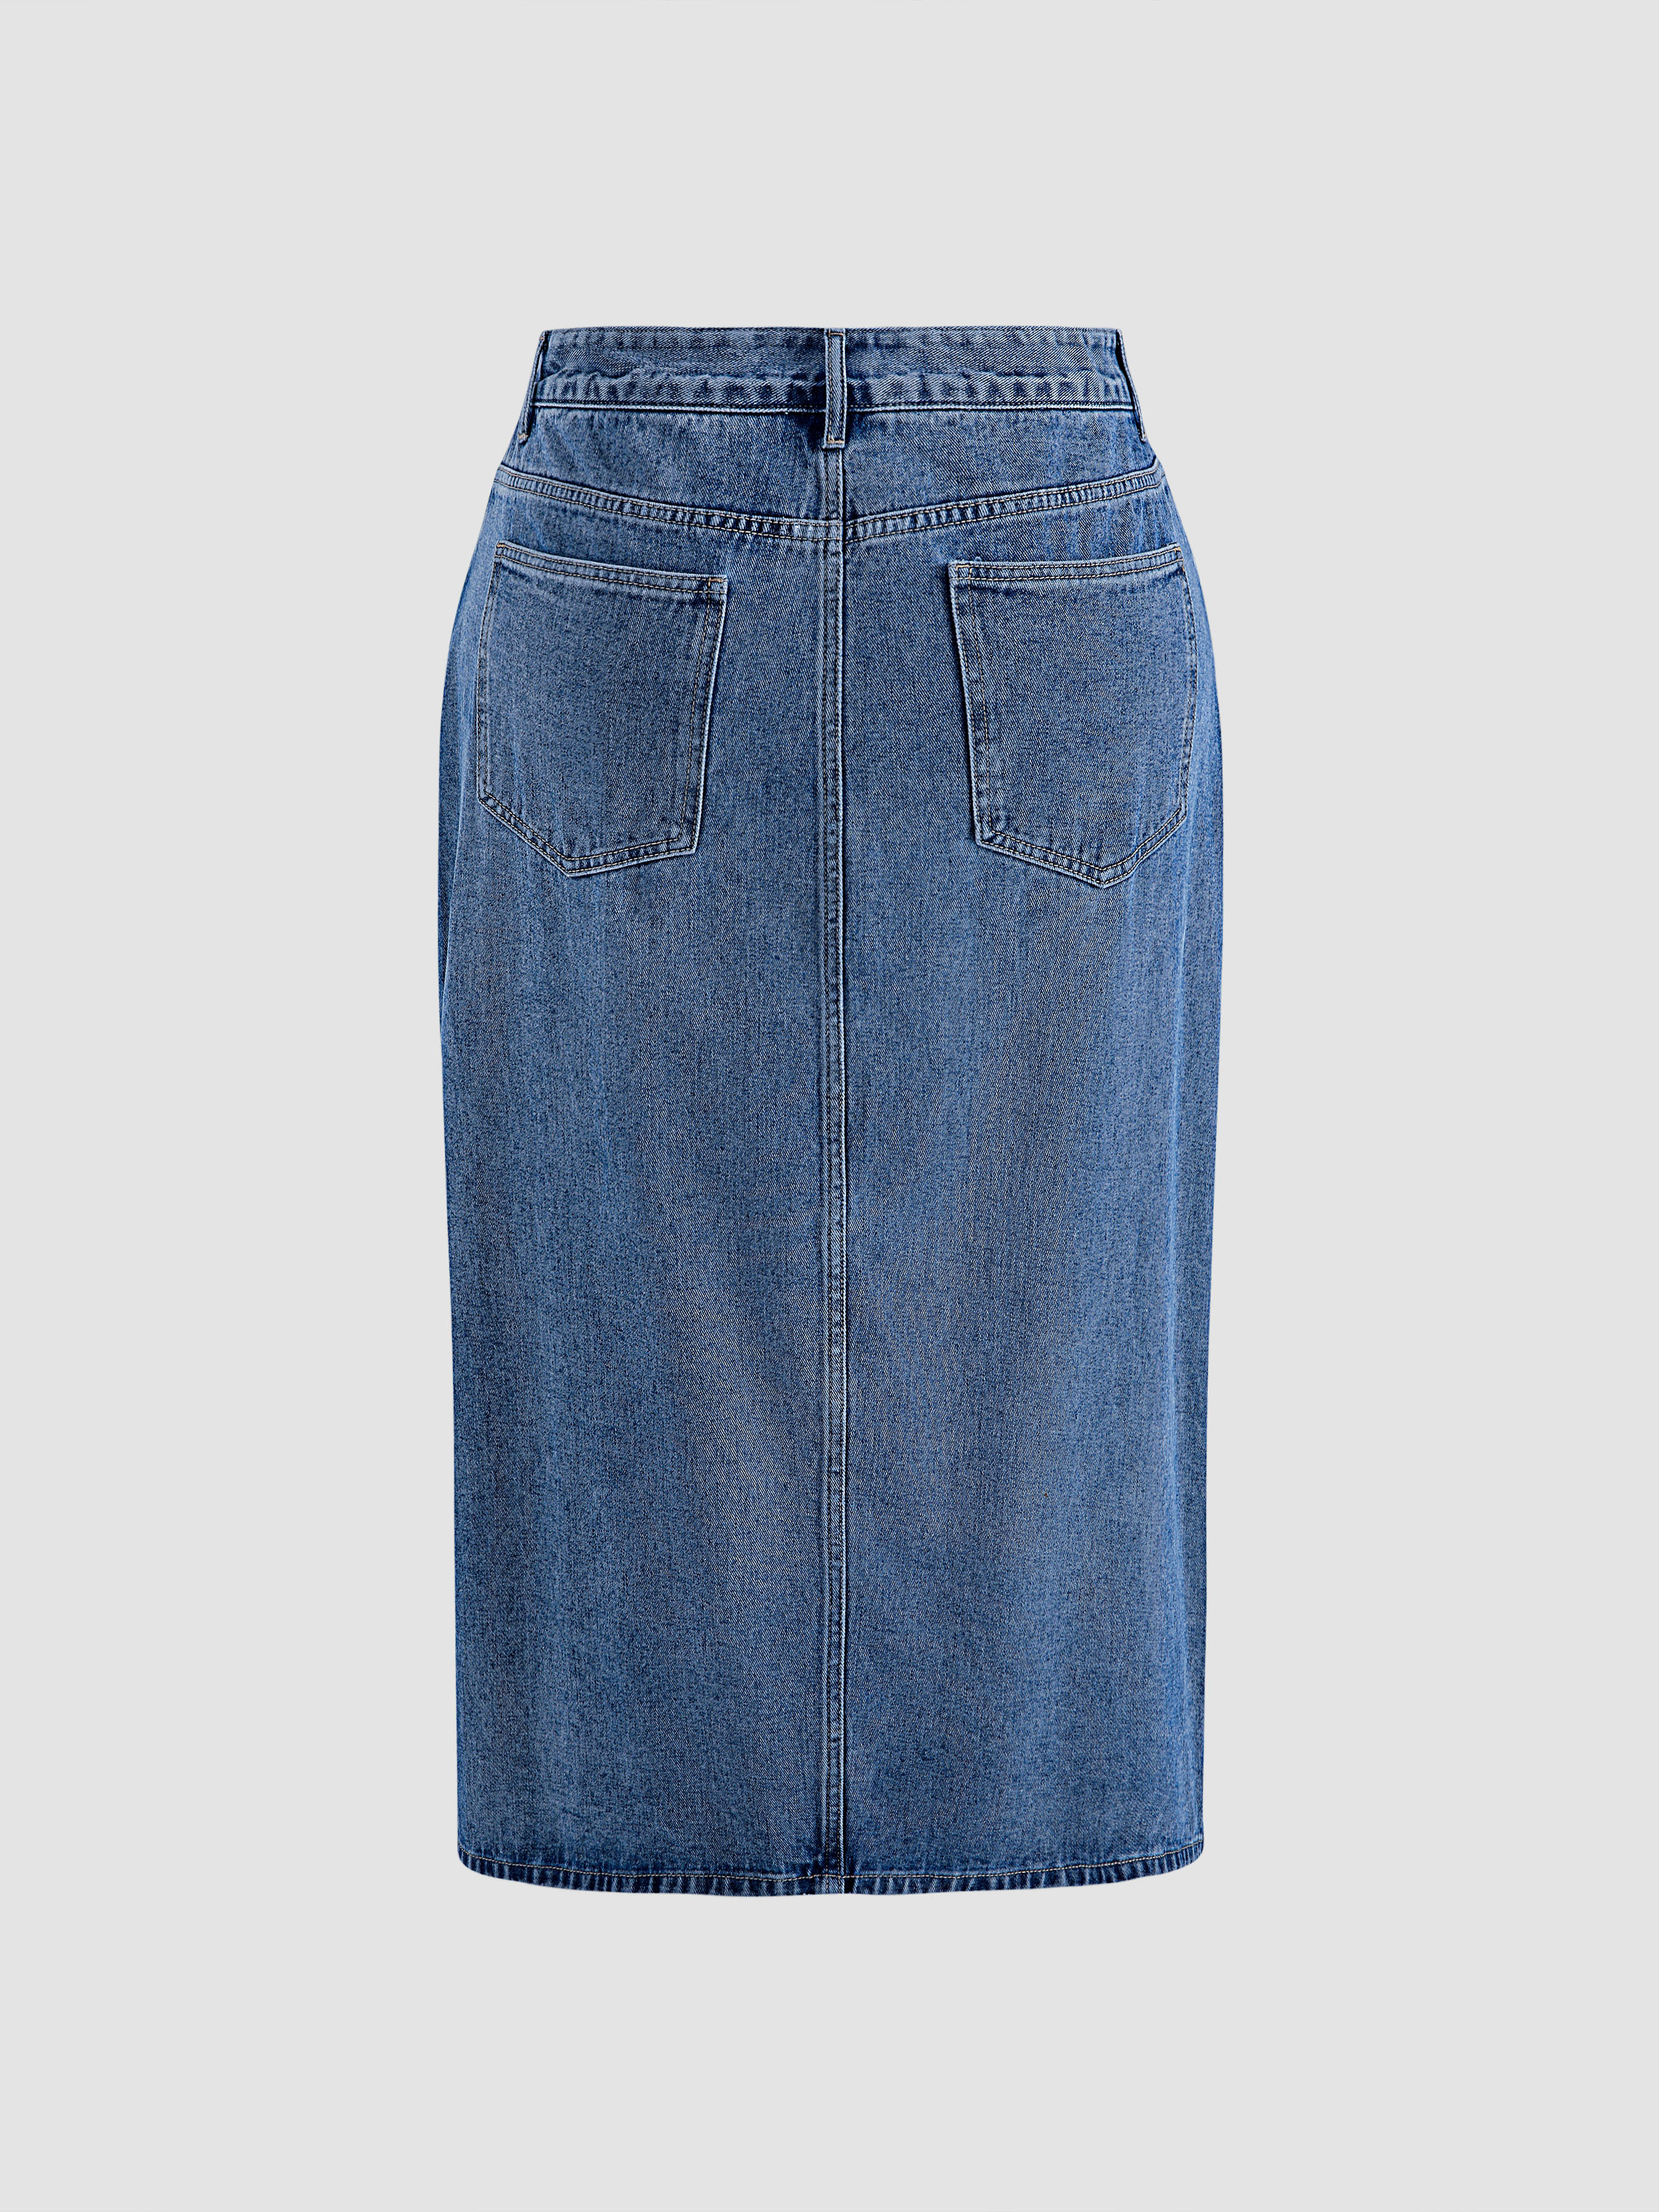 Chiqle Distressed Straight Blue Denim Skirt, Medium - Walmart.com